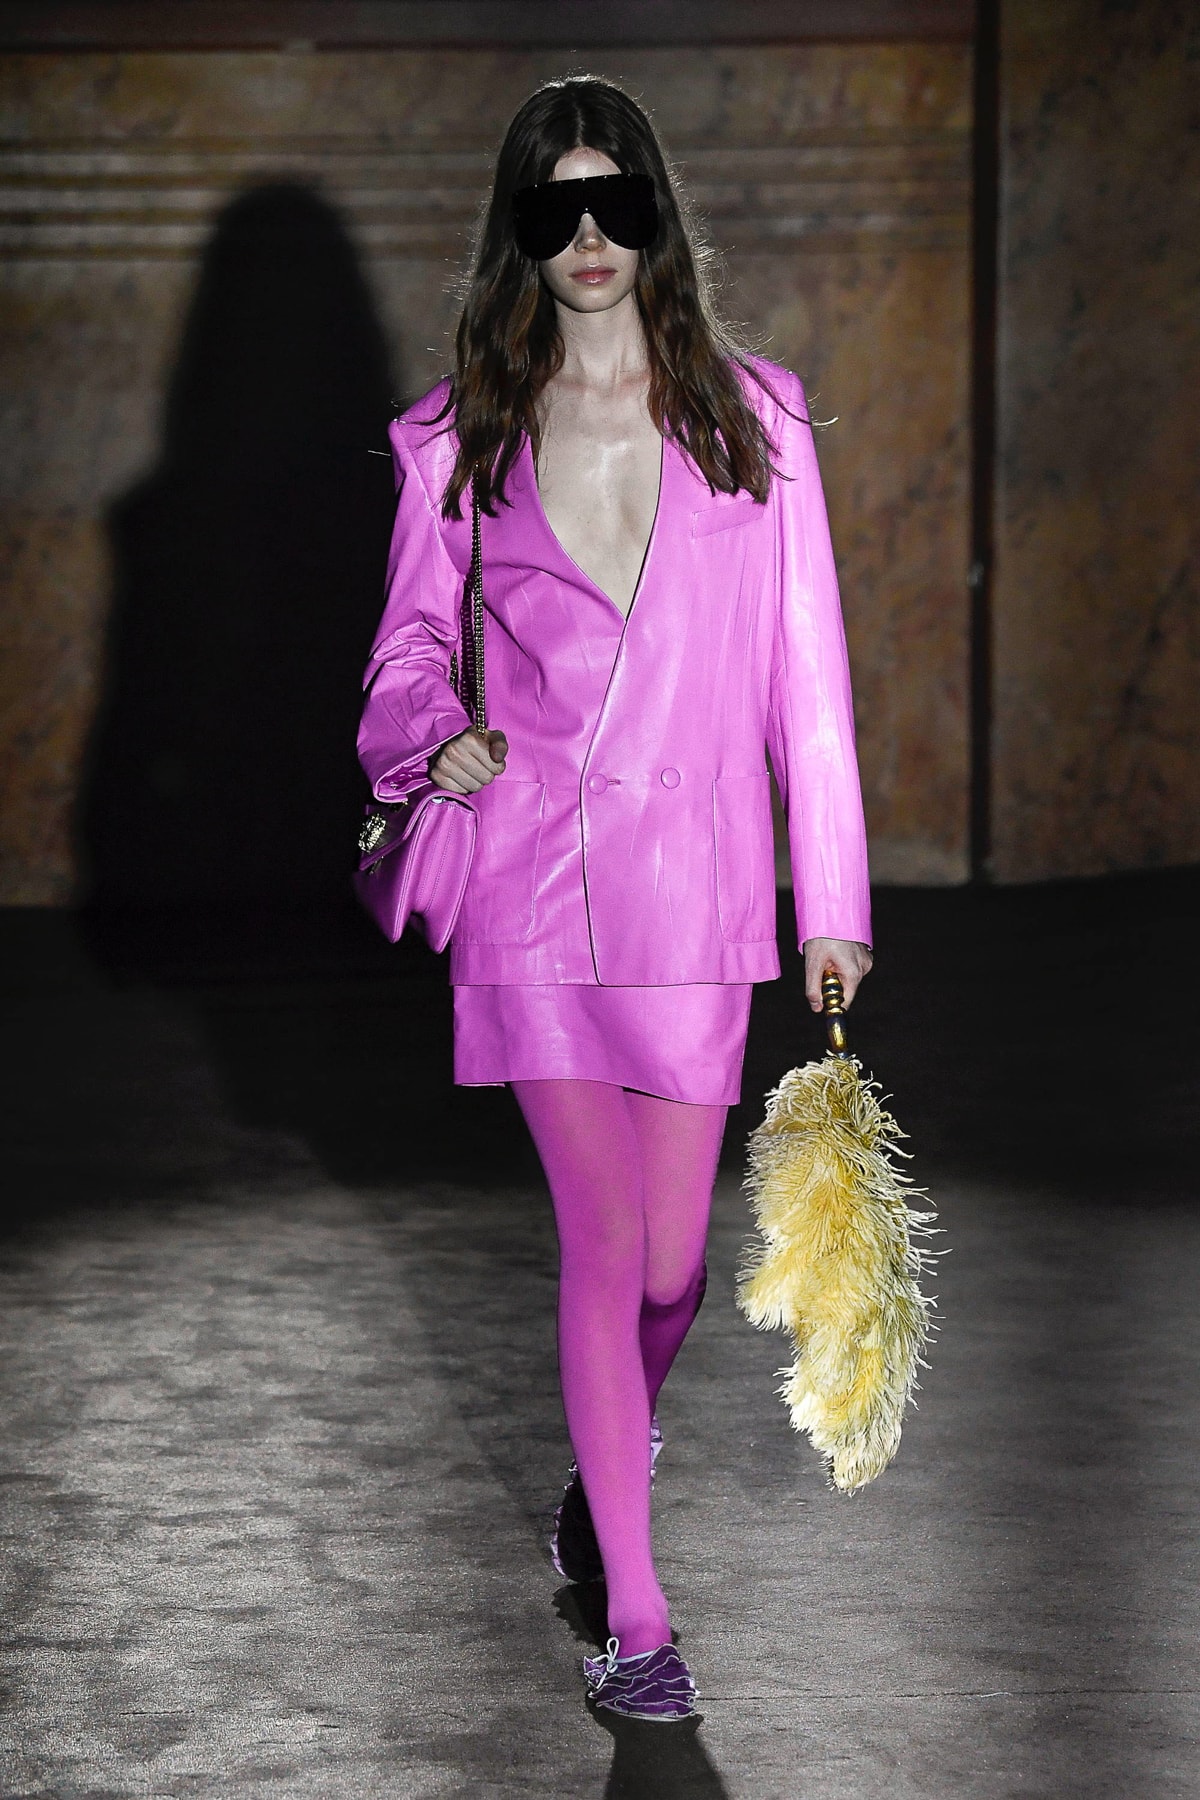 Gucci Alessandro Michelle Spring Summer 2019 Paris Fashion Week Show Collection Blazer Skirt Tights Pink